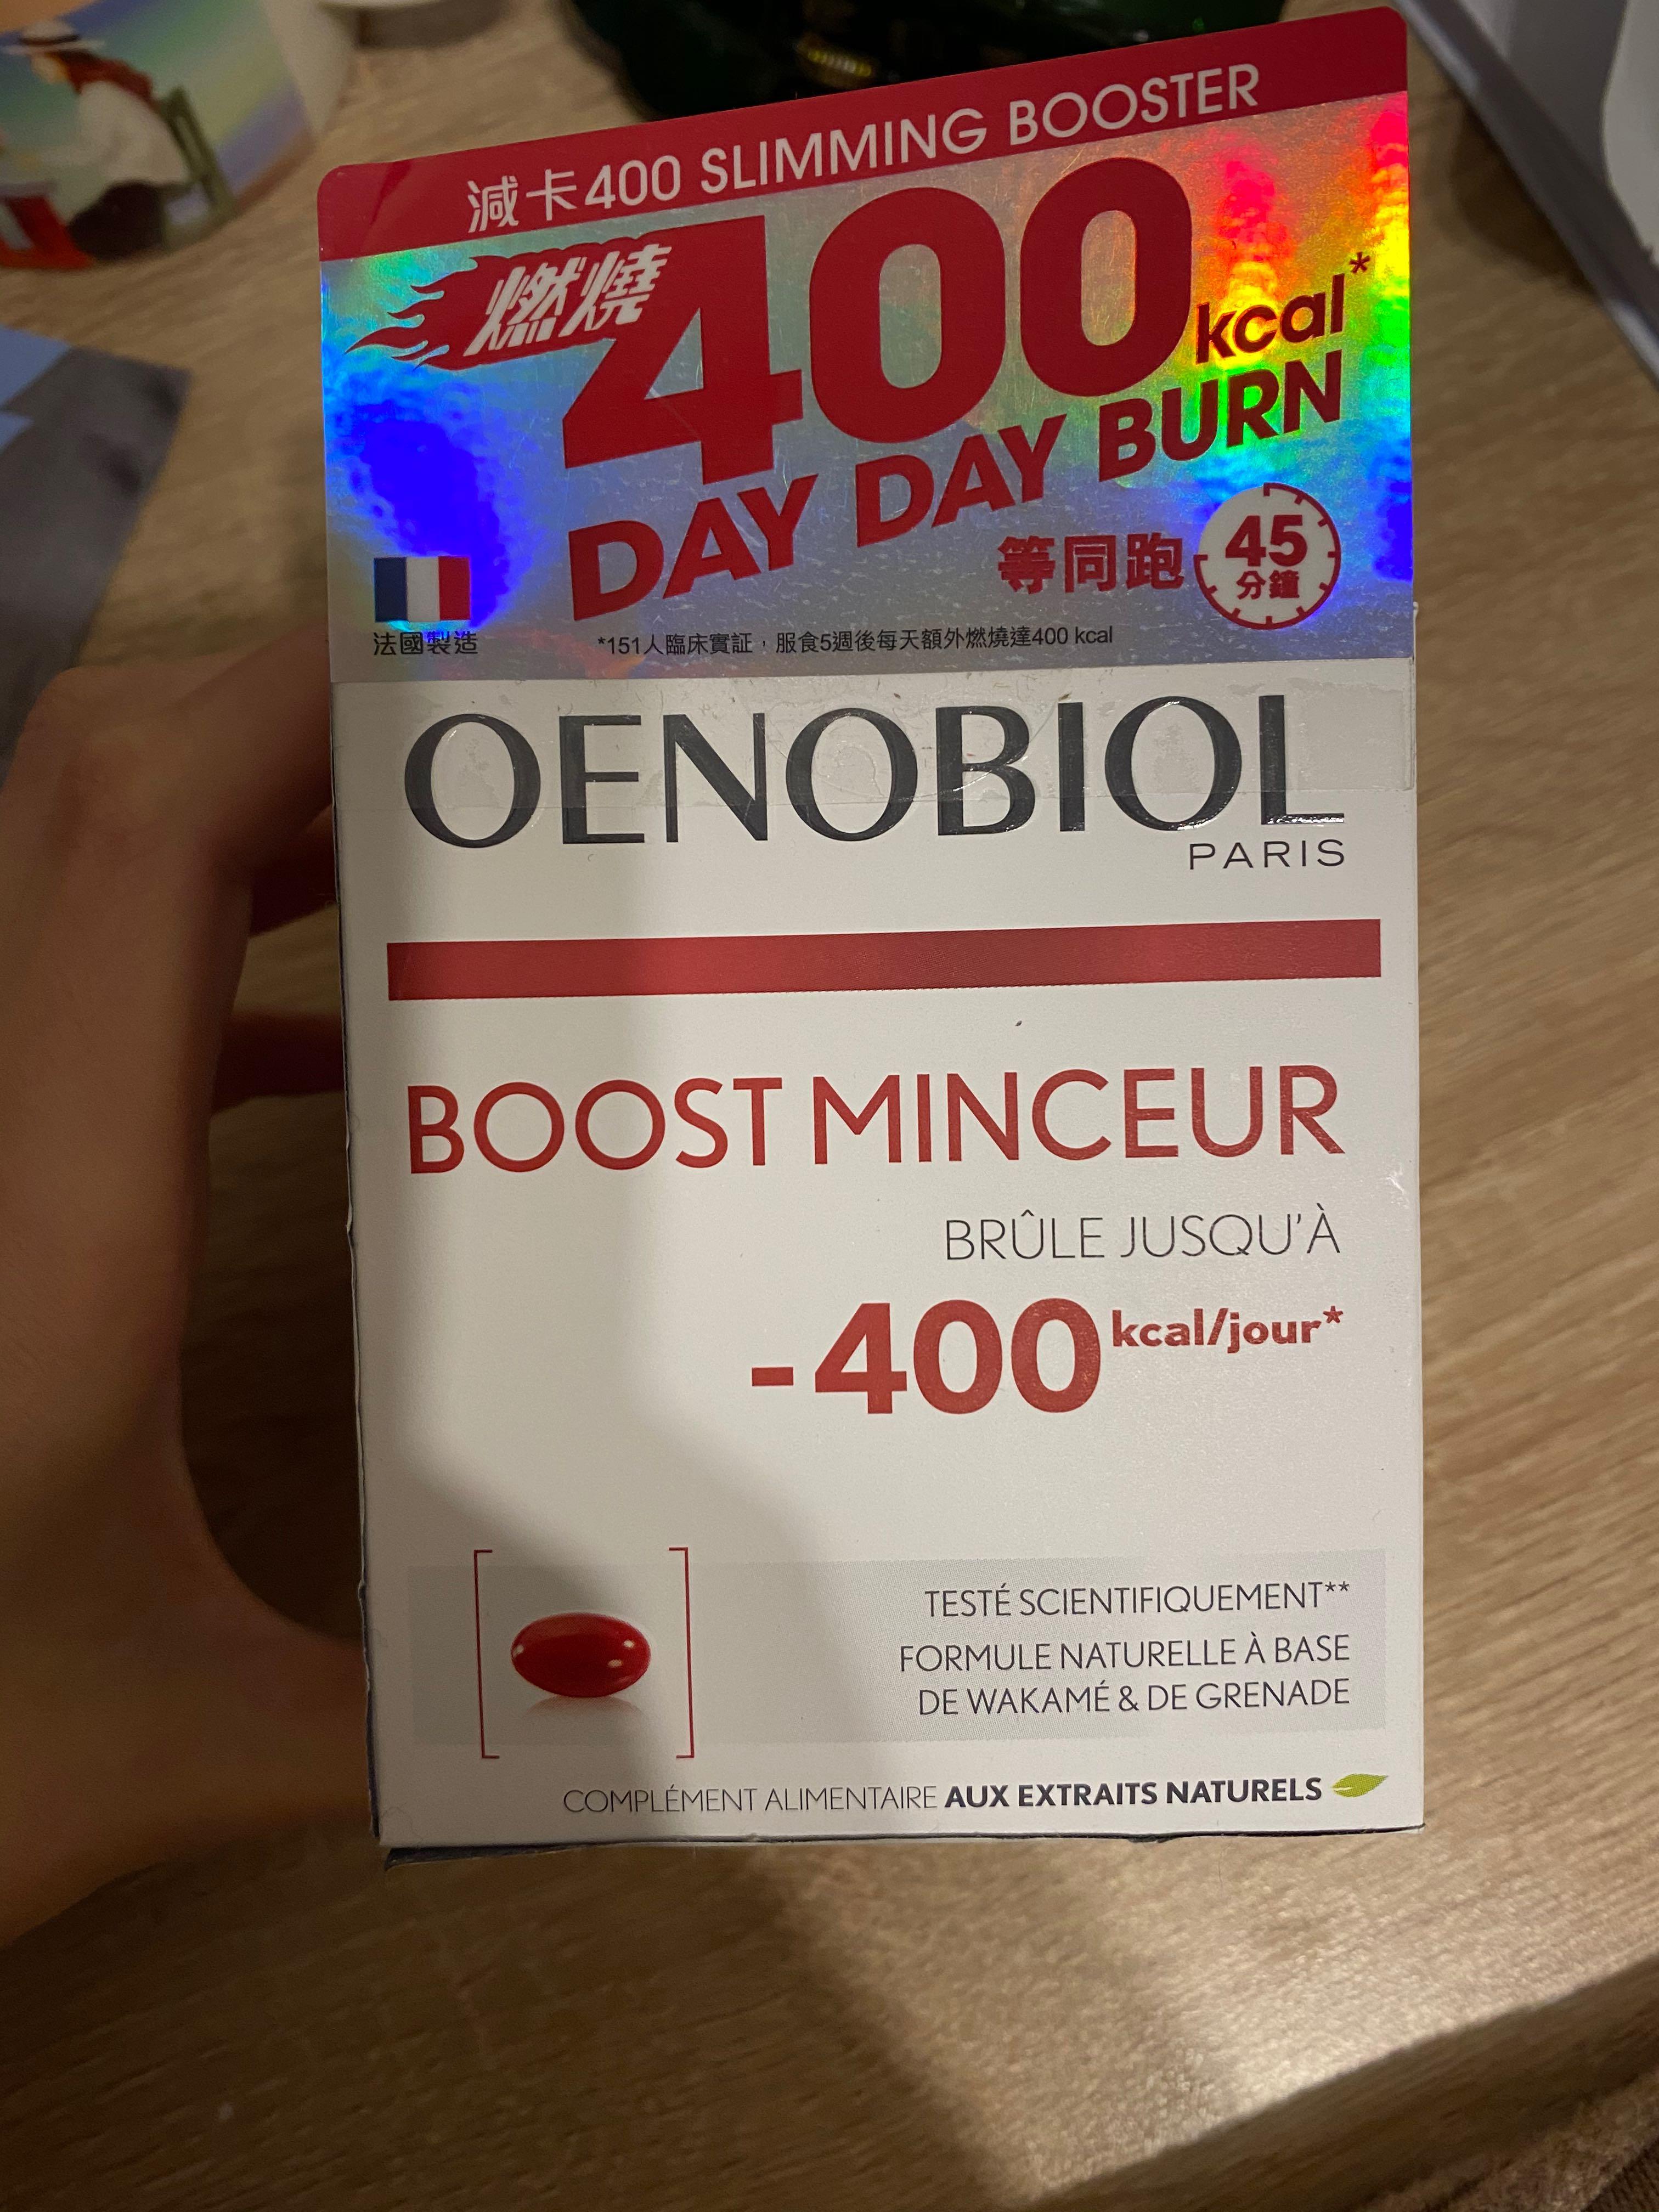 Oenobiol Boost Minceur 減400卡路里 健康及營養食用品 健康補充品 健康補充品 維他命及補充品